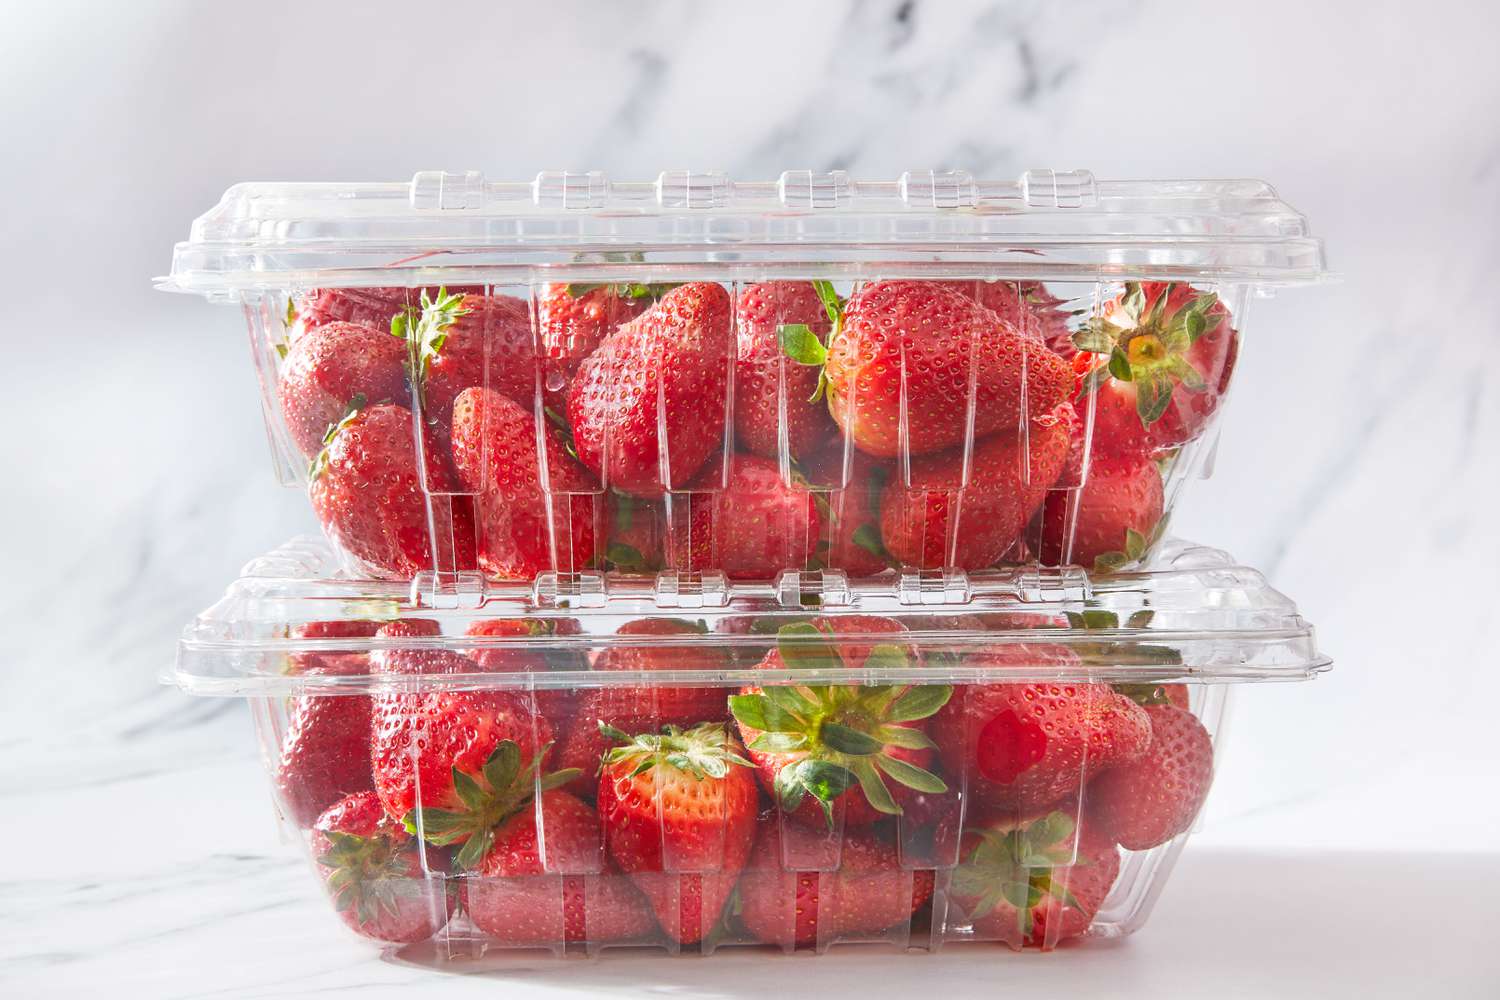 How To Store Strawberries In Fridge